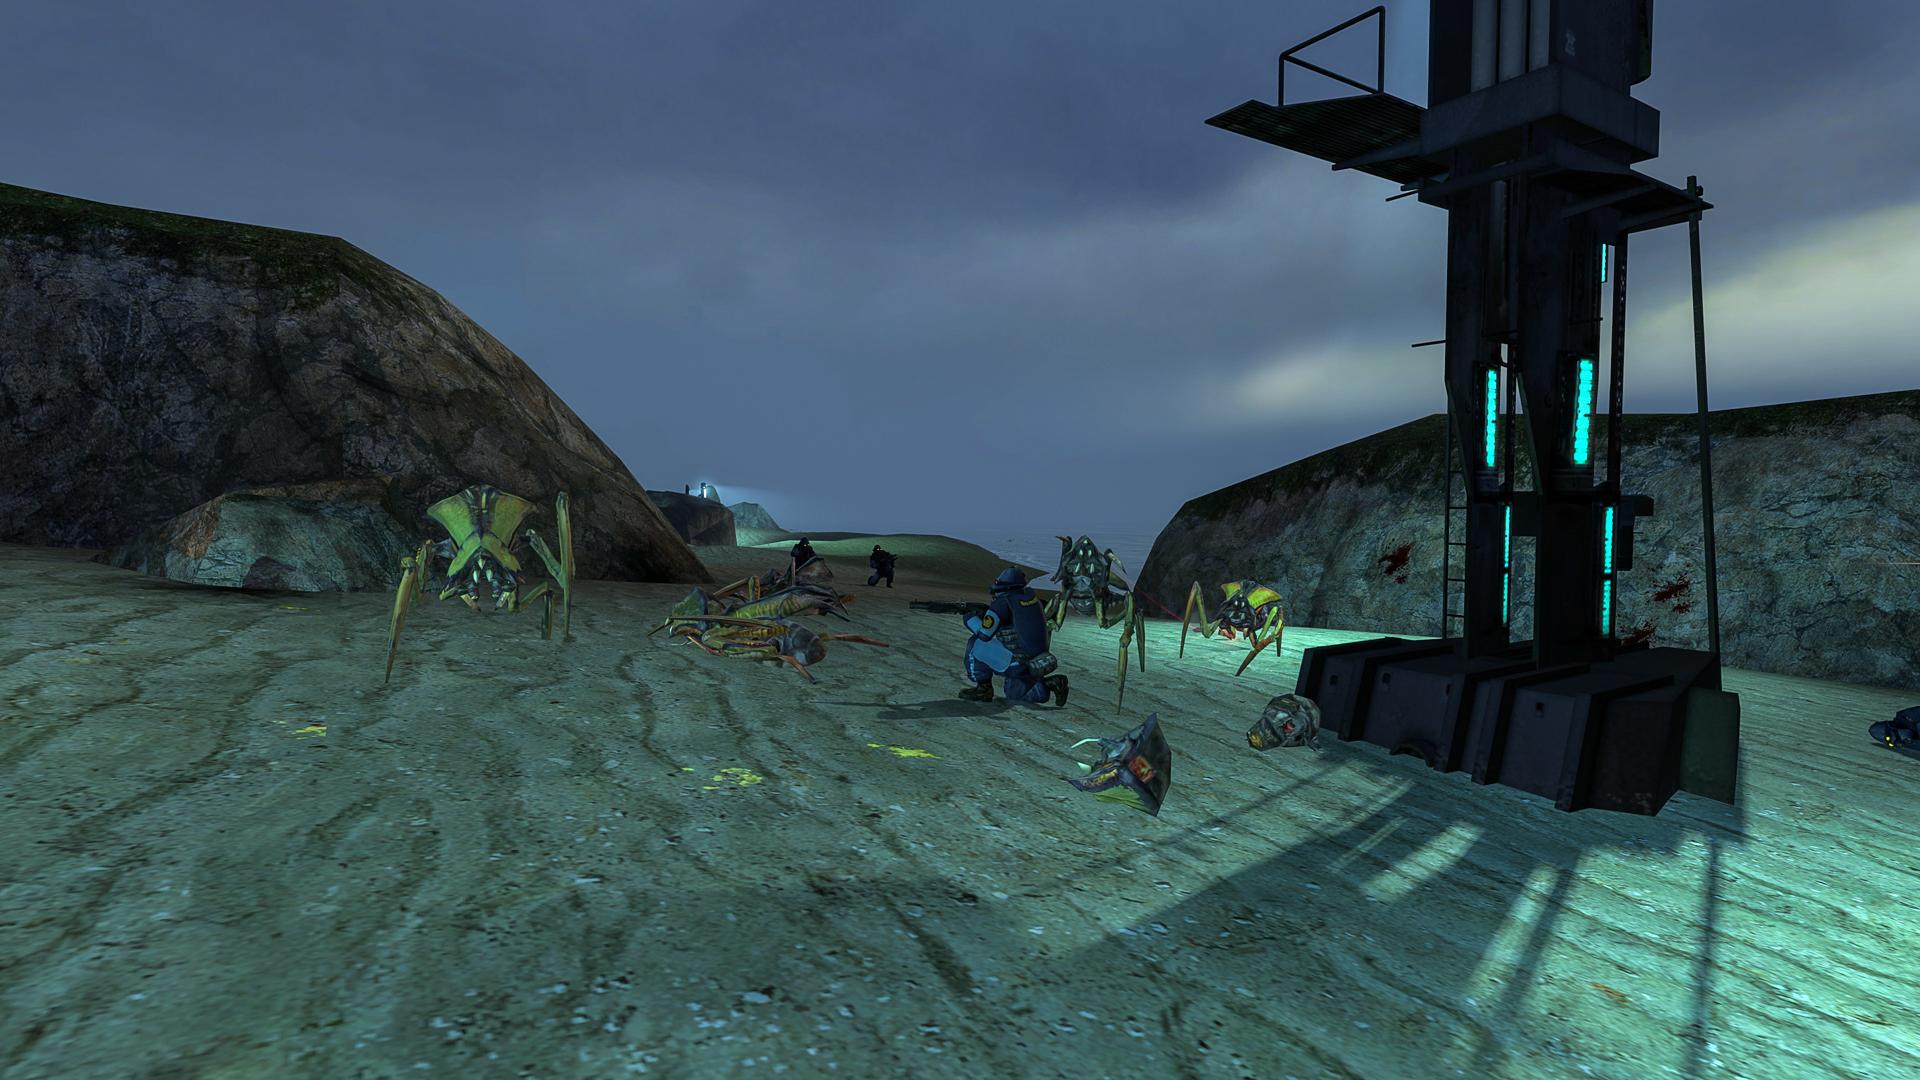 Screenshot №17 from game Half-Life 2: Update